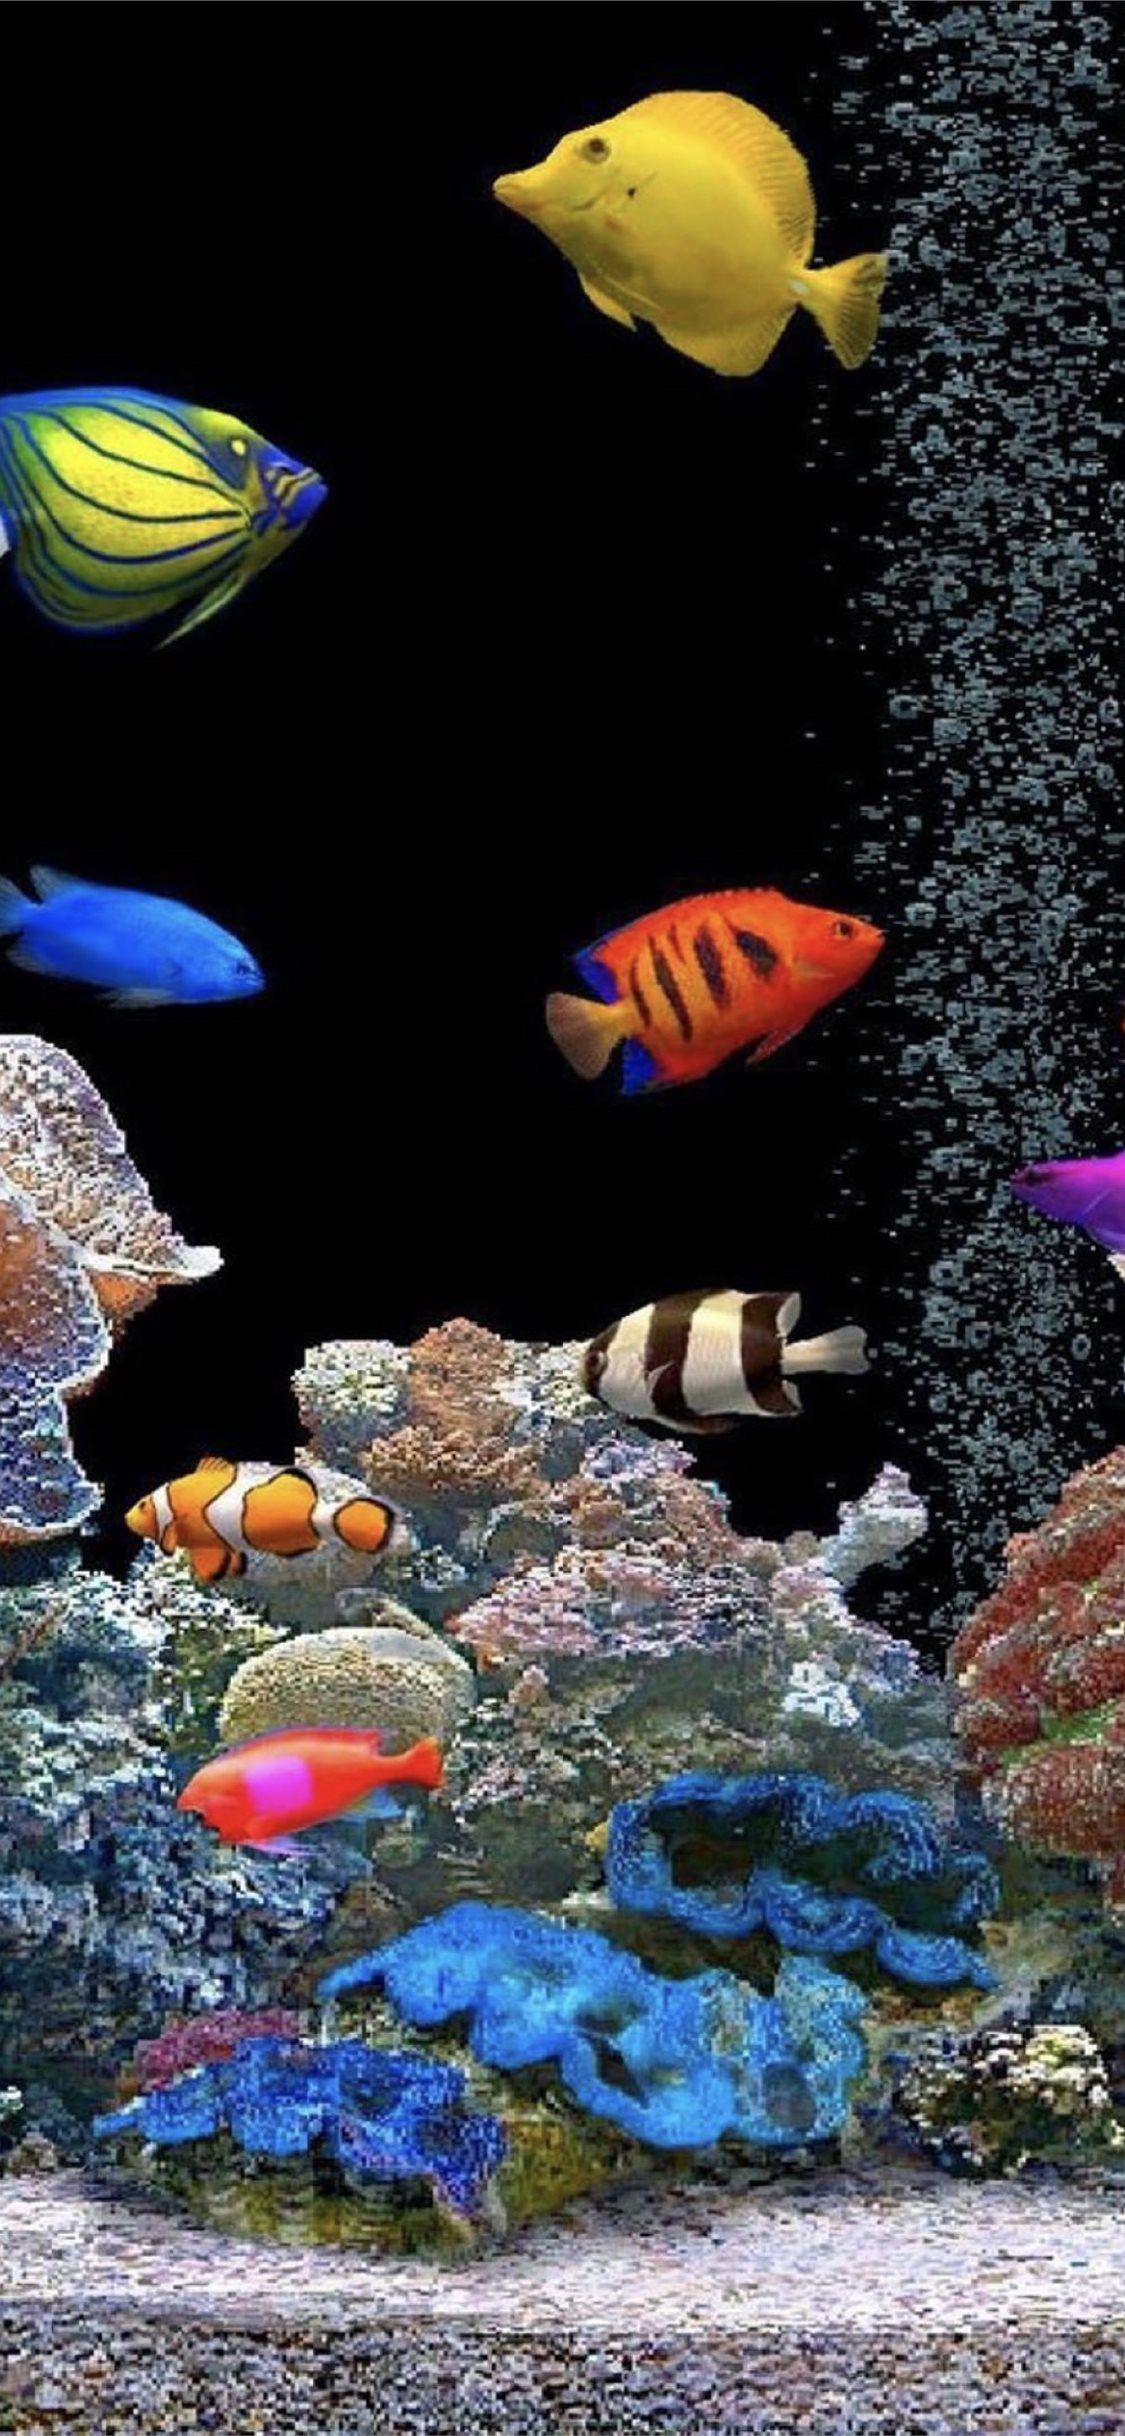 Aquarium iPhone Wallpapers - Top Free